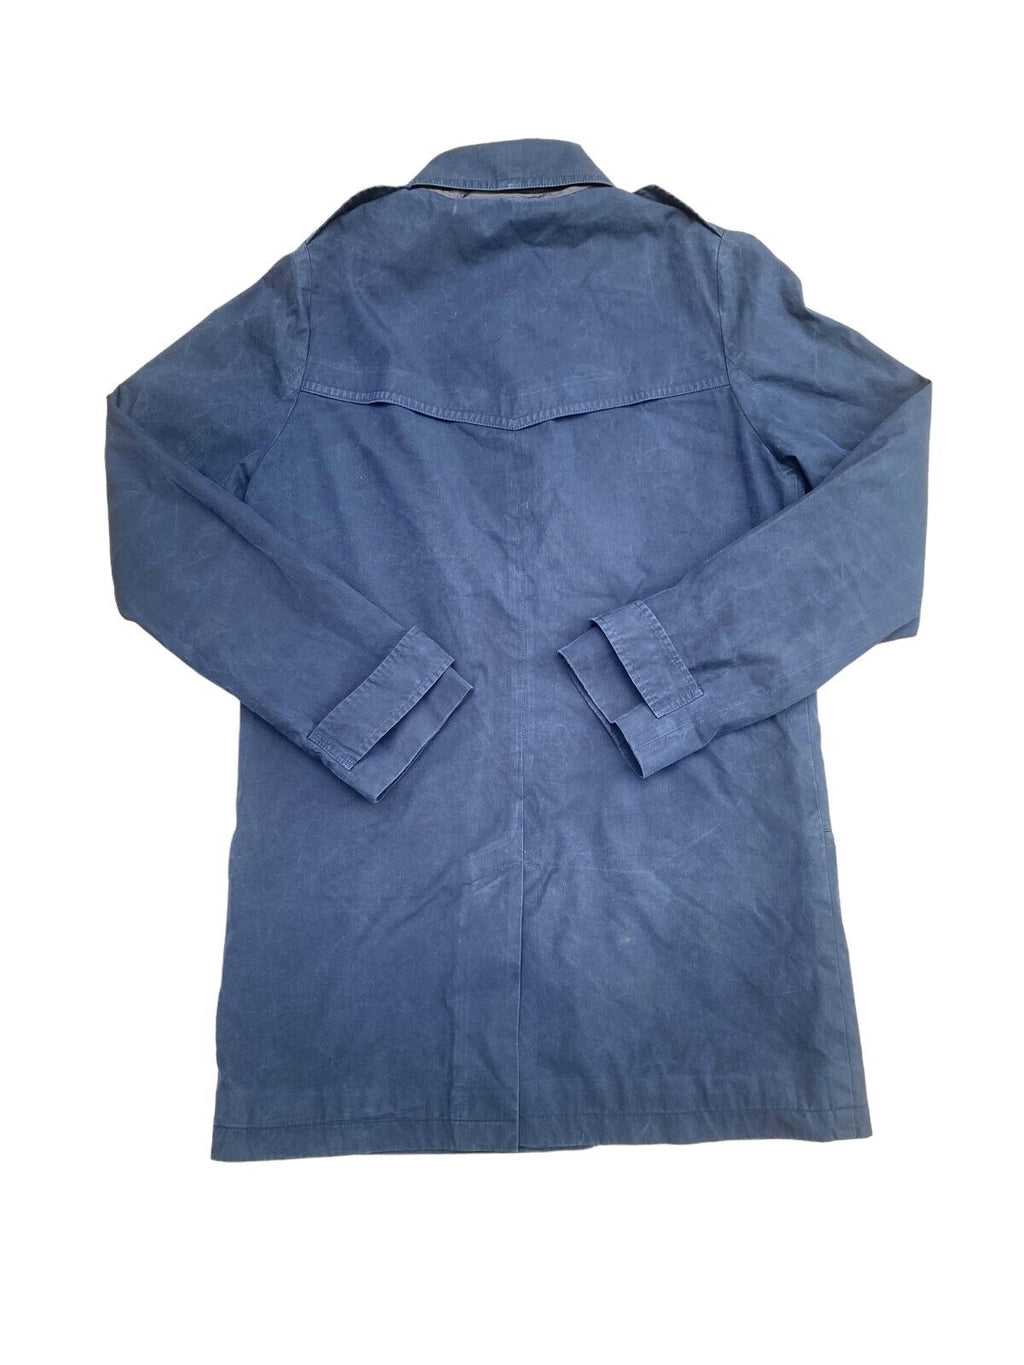 Navy cotton coat